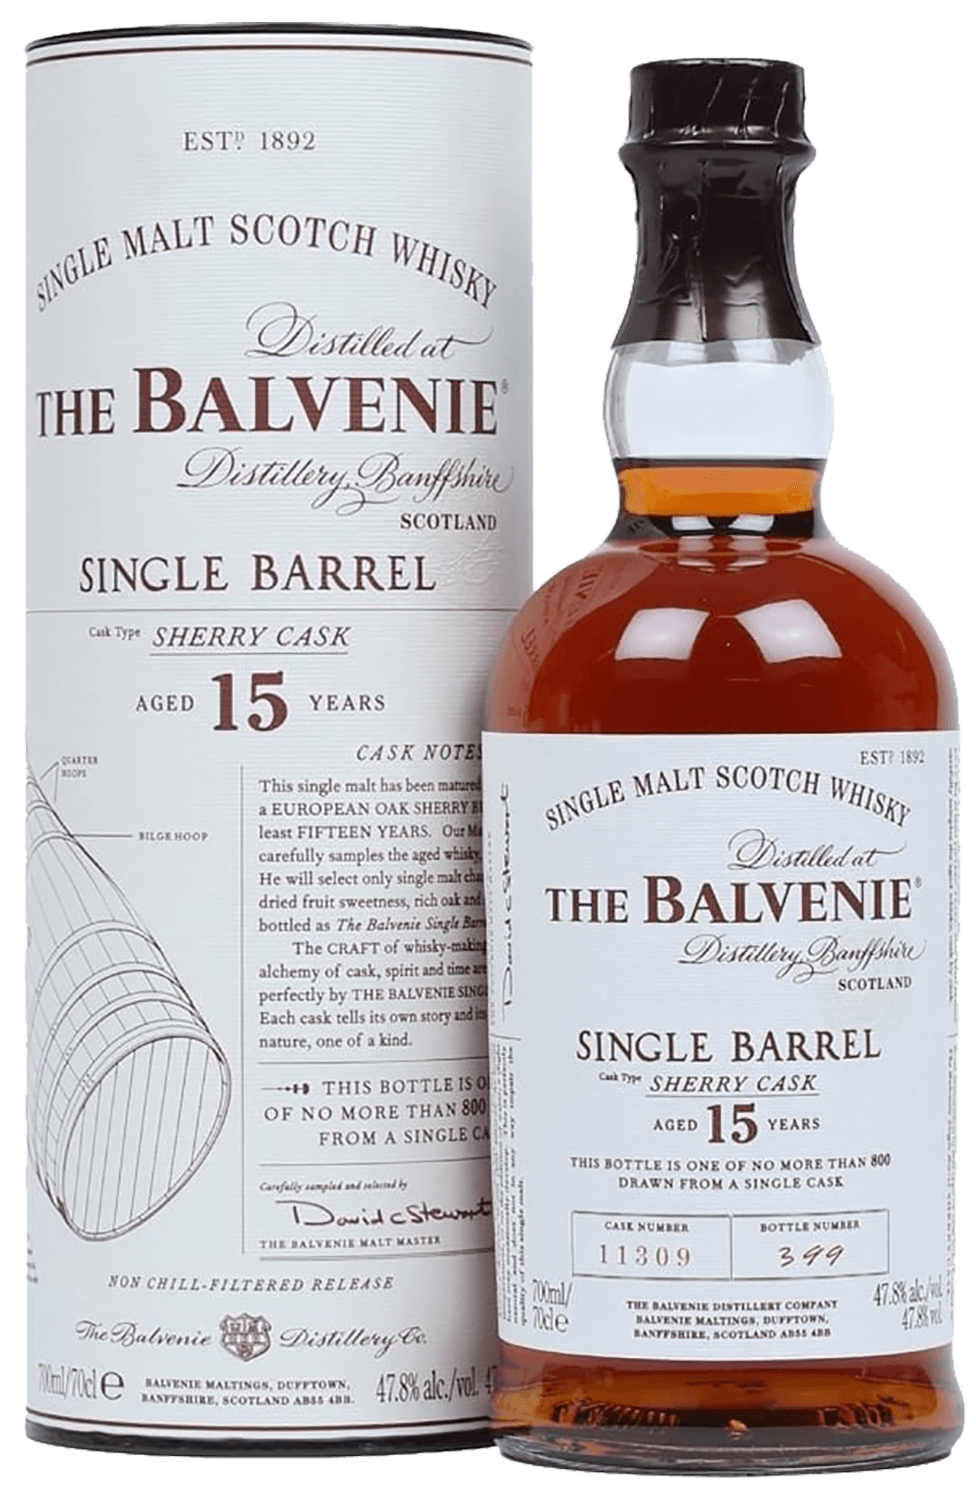 The Balvenie Single Barrel Sherry Cask 15 Years Old Single Malt Scotch Whisky (gift box) the balvenie single barrel 12 y o single malt scotch whisky gift box